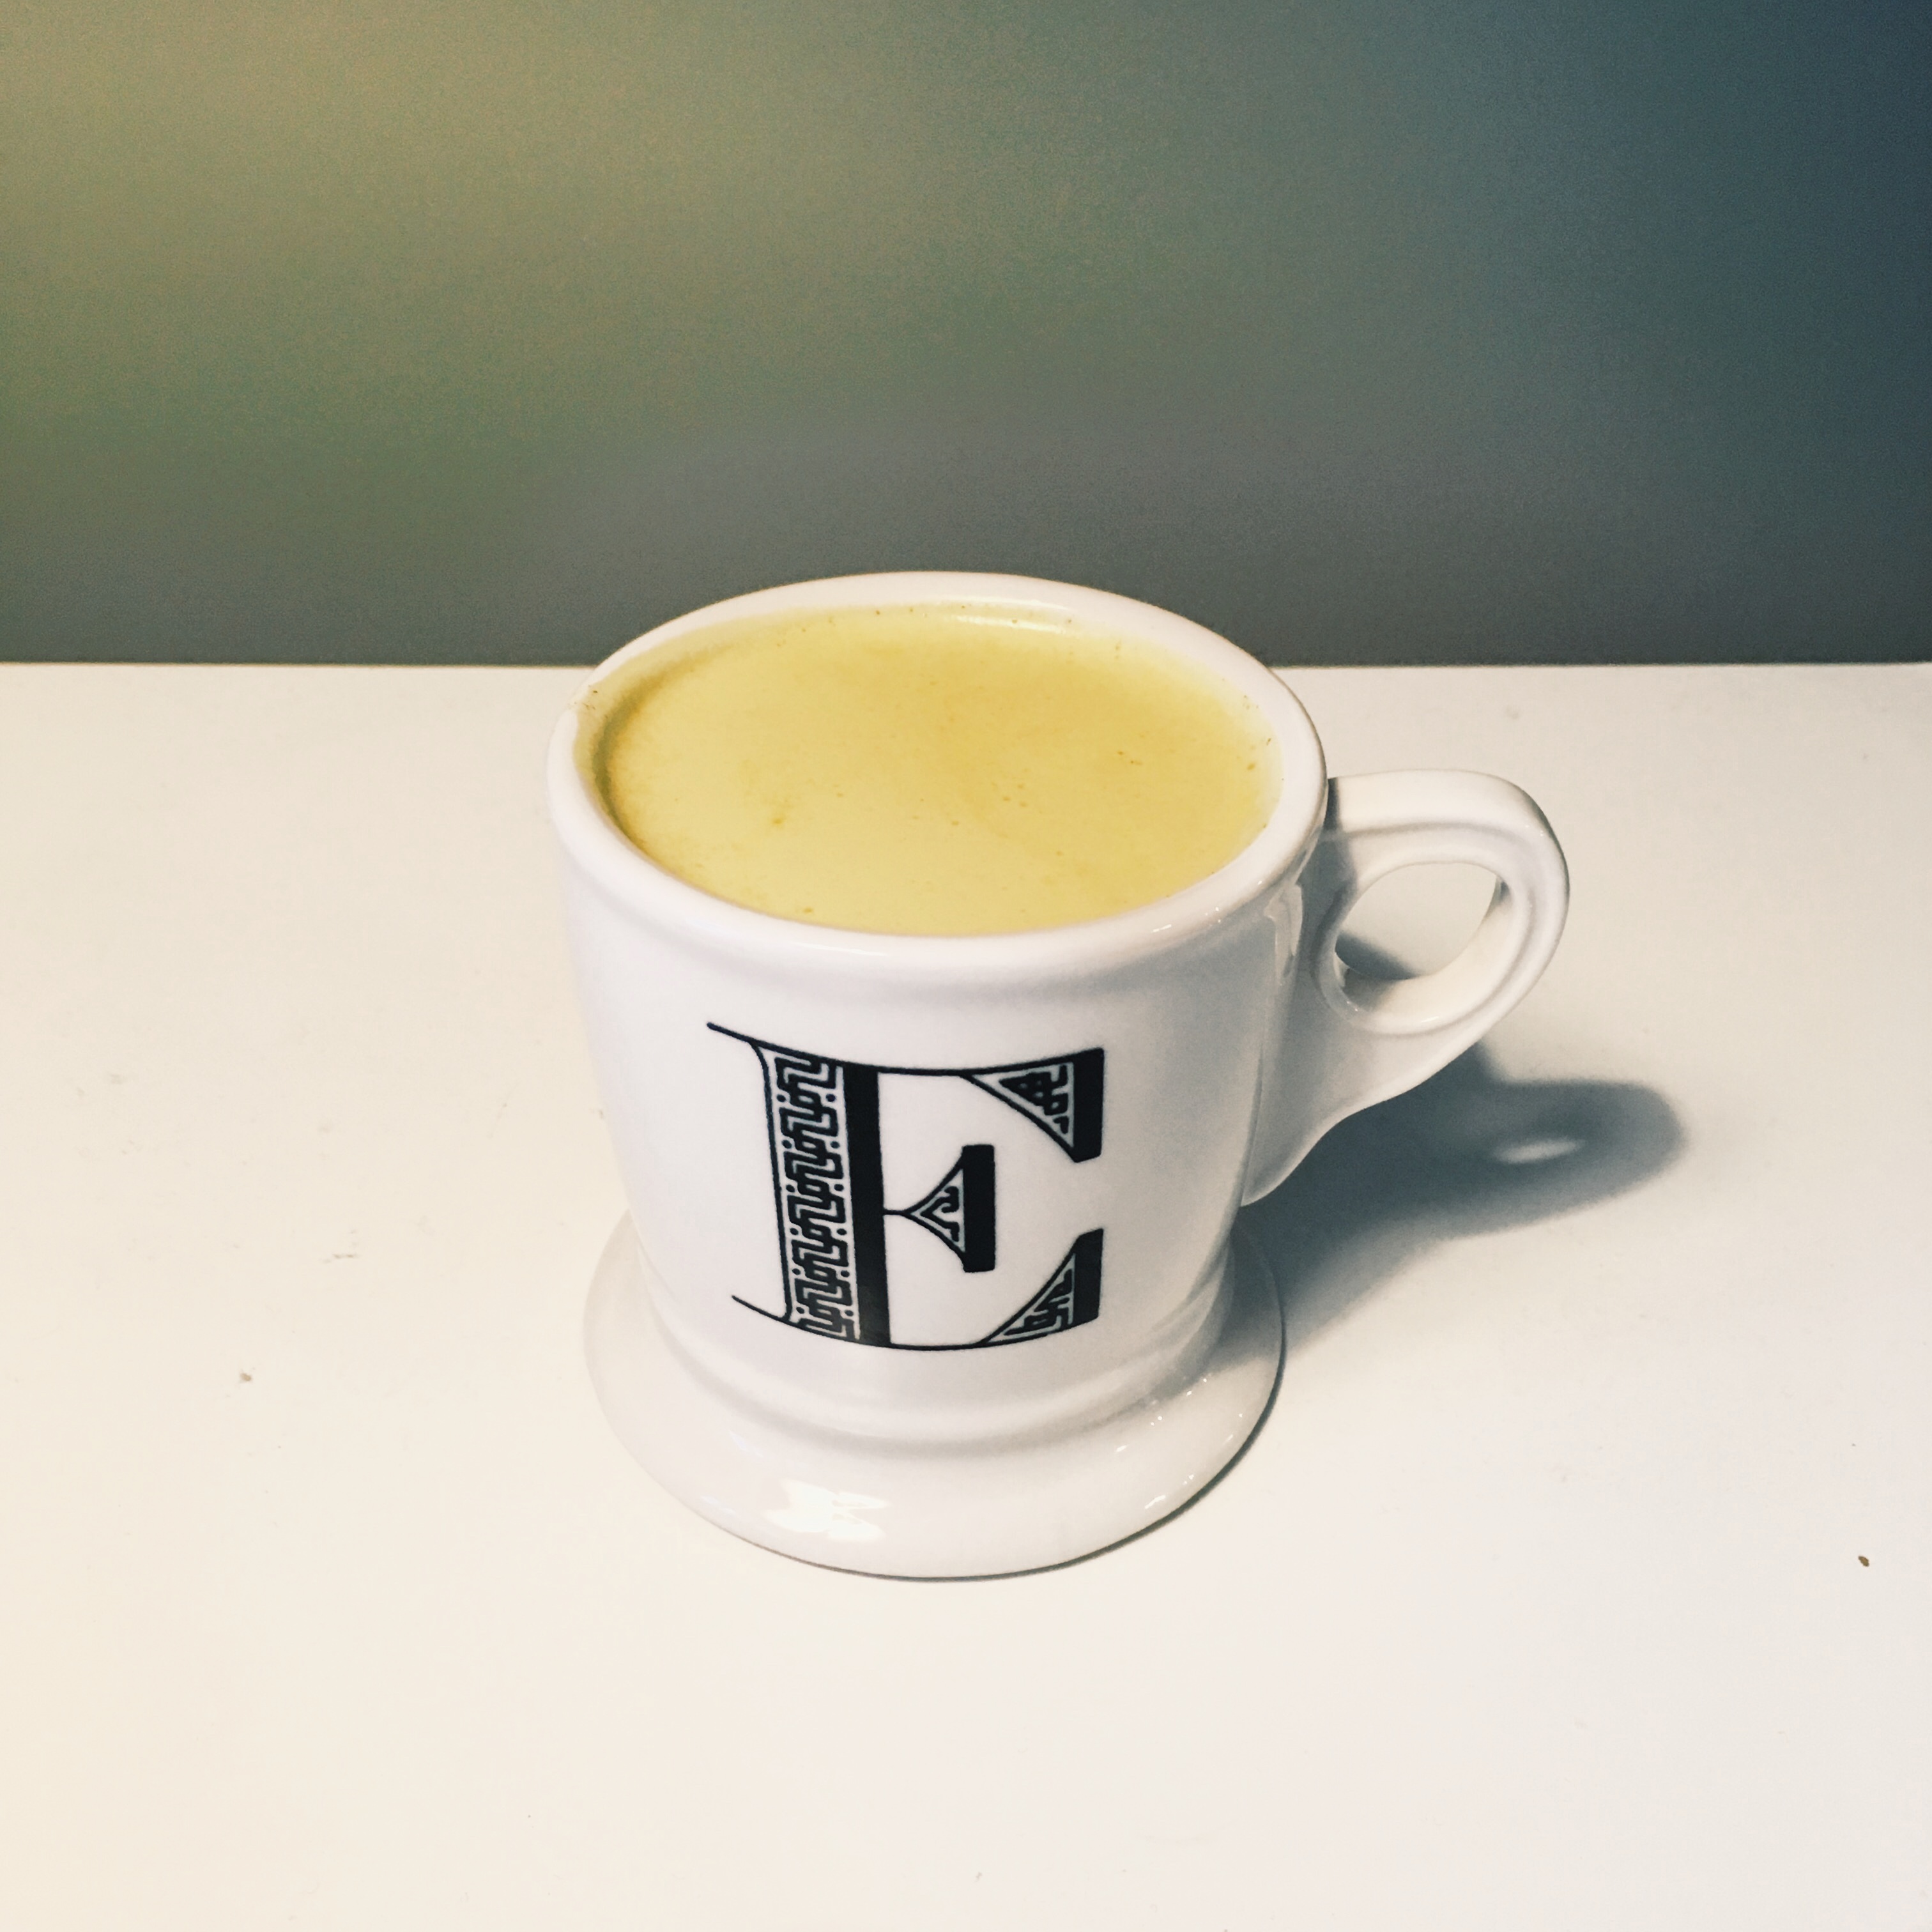 turmeric latte